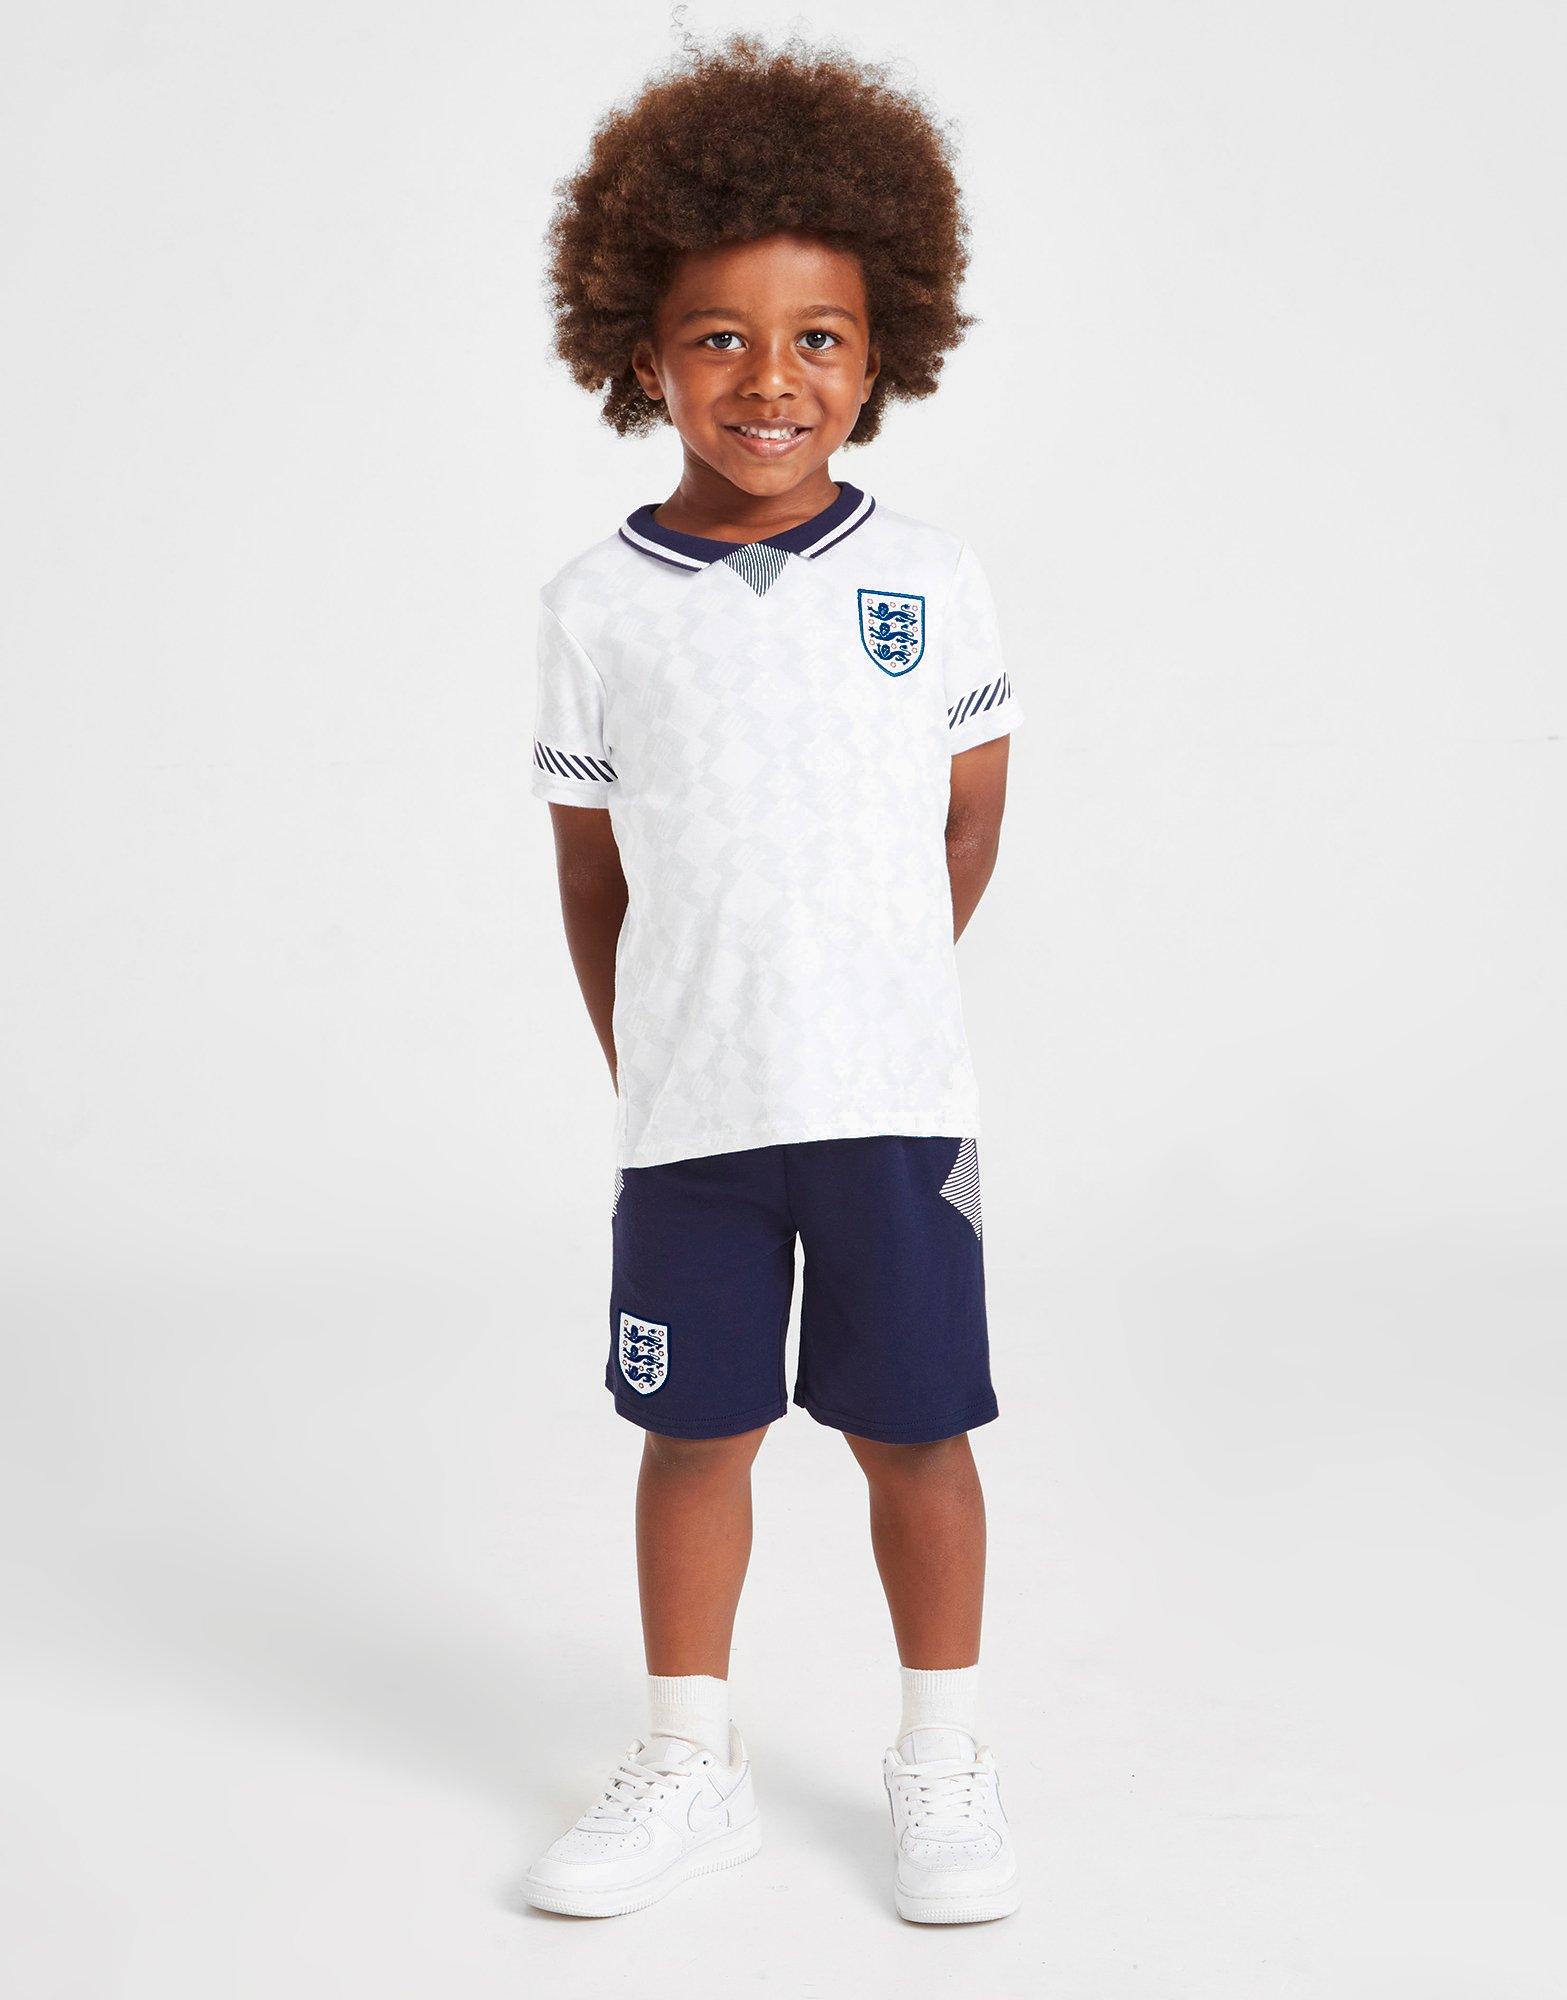 Retro England Football Shirts & Kits